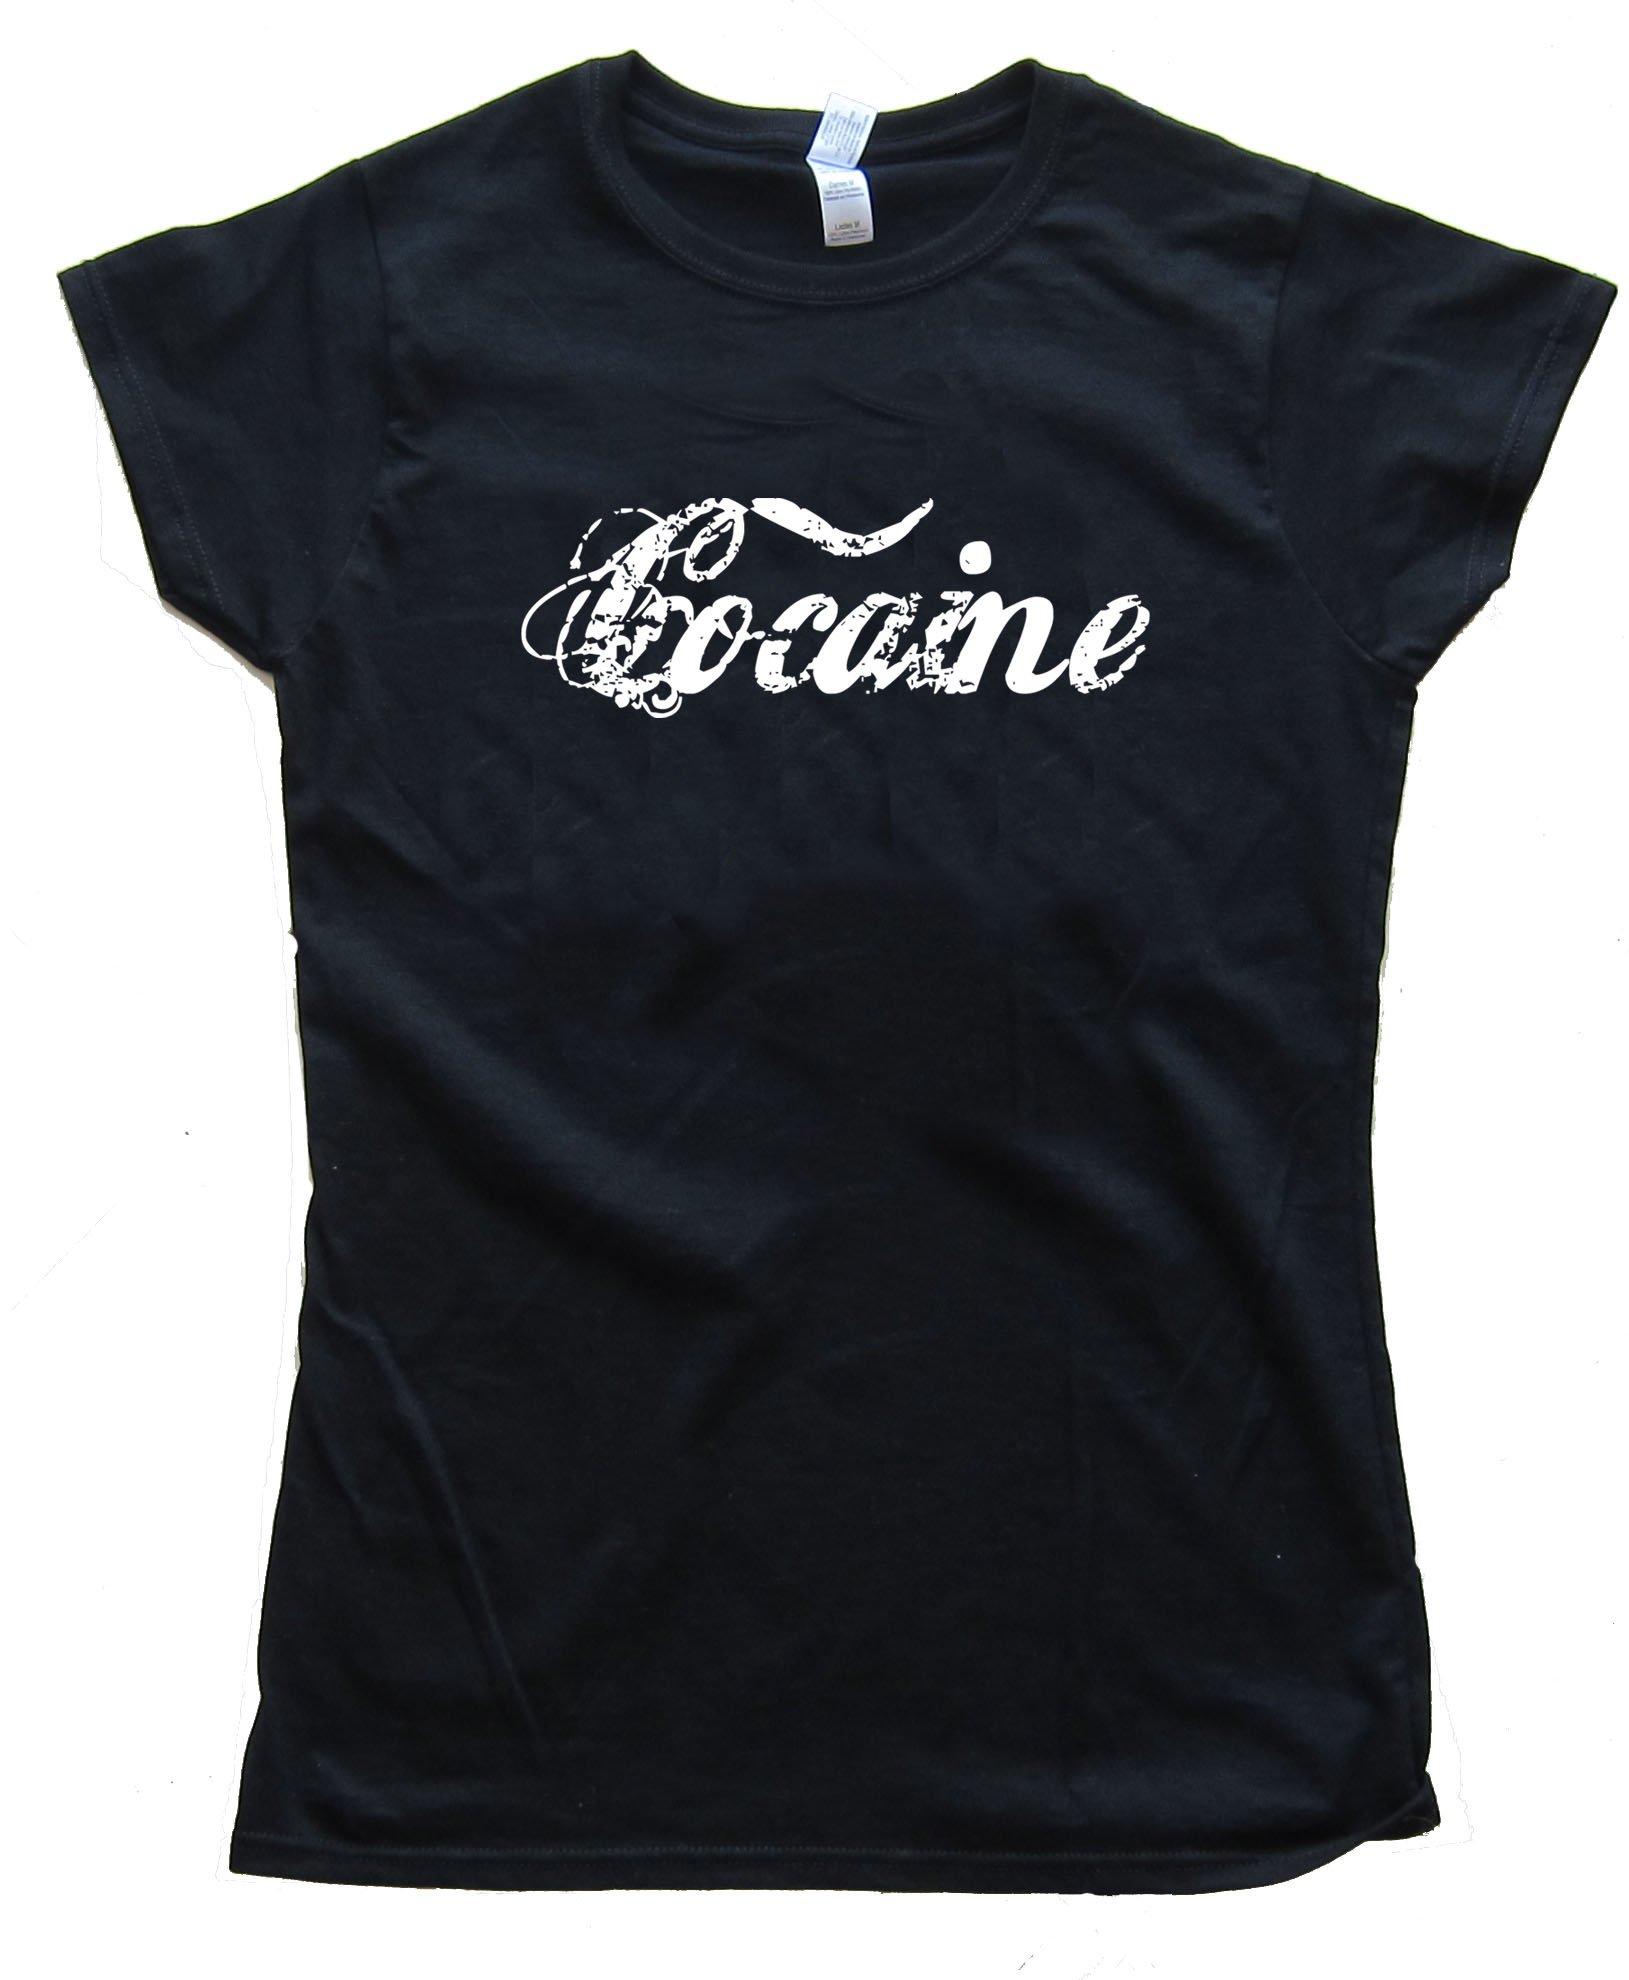 Womens Cocaine - Tee Shirt